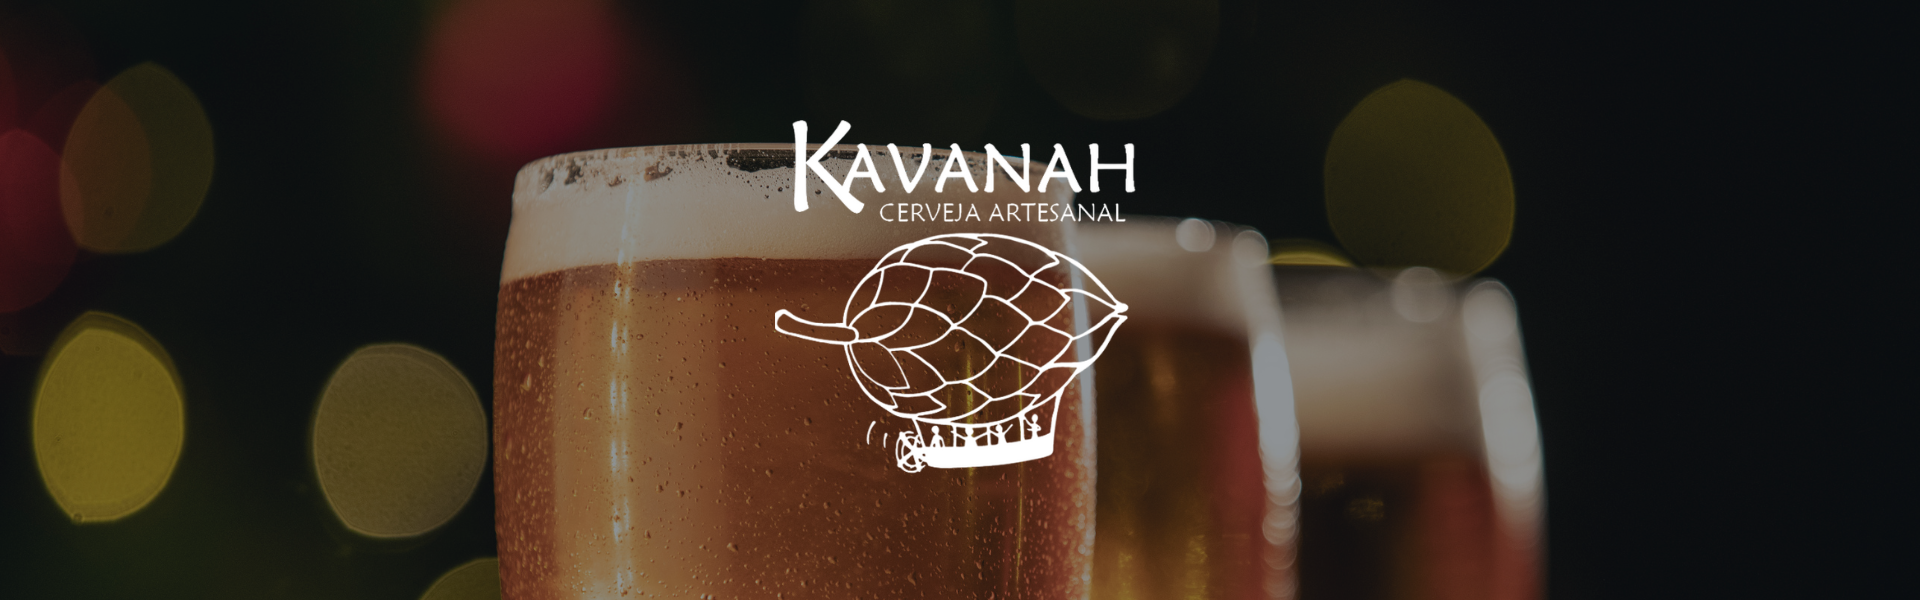 kavanah-cervejaria-artesanal-sc-ascenda-noticias-digital (2)